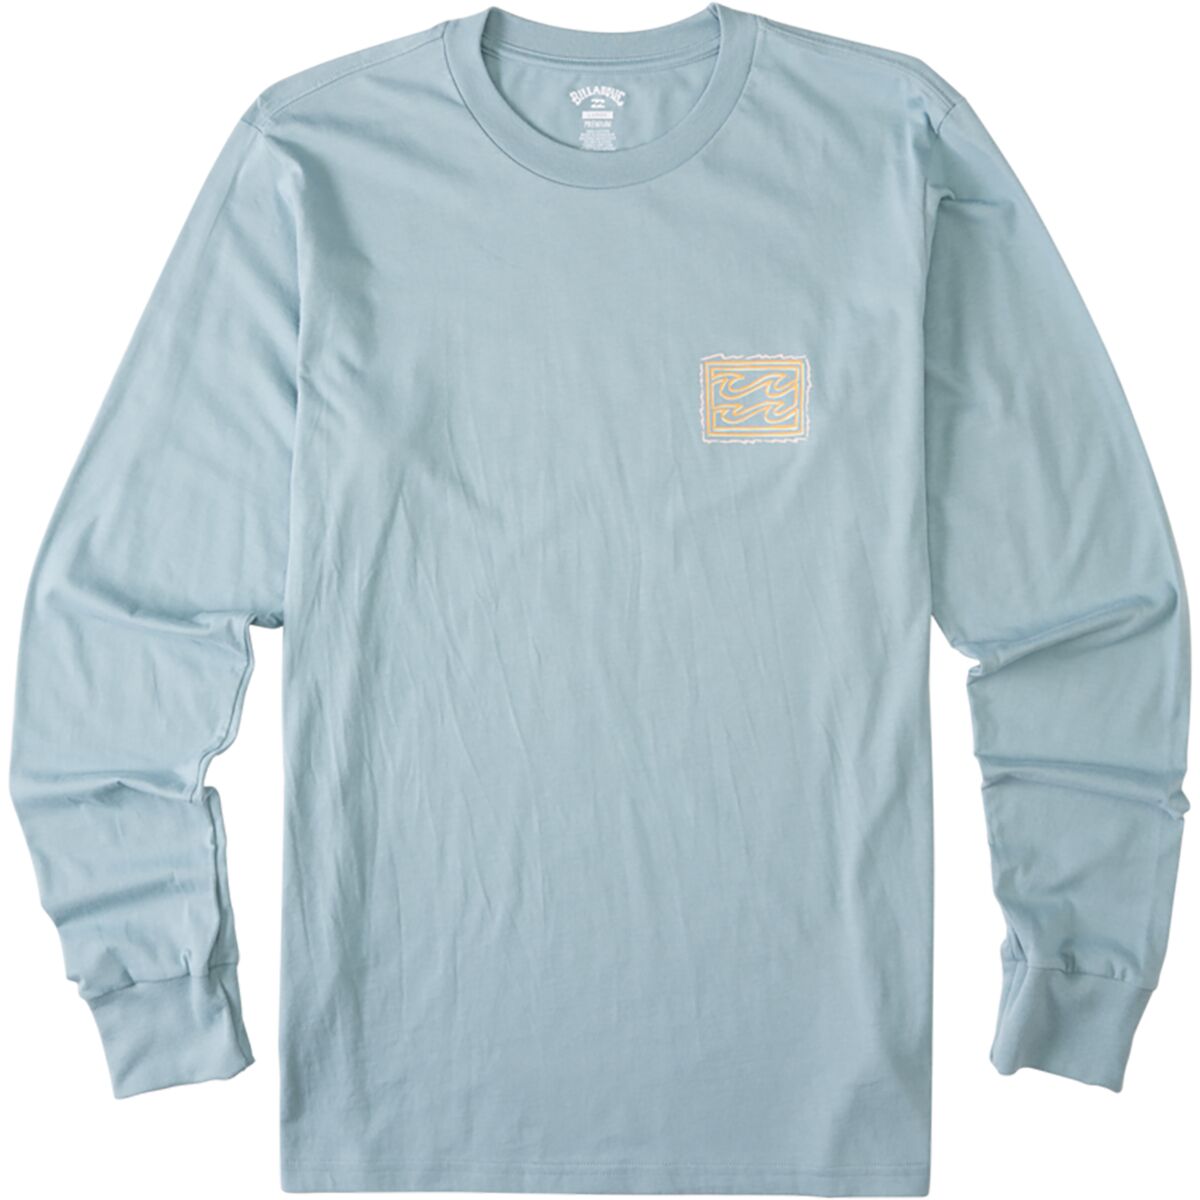 Billabong Crayon Wave Long-Sleeve T-Shirt - Men's